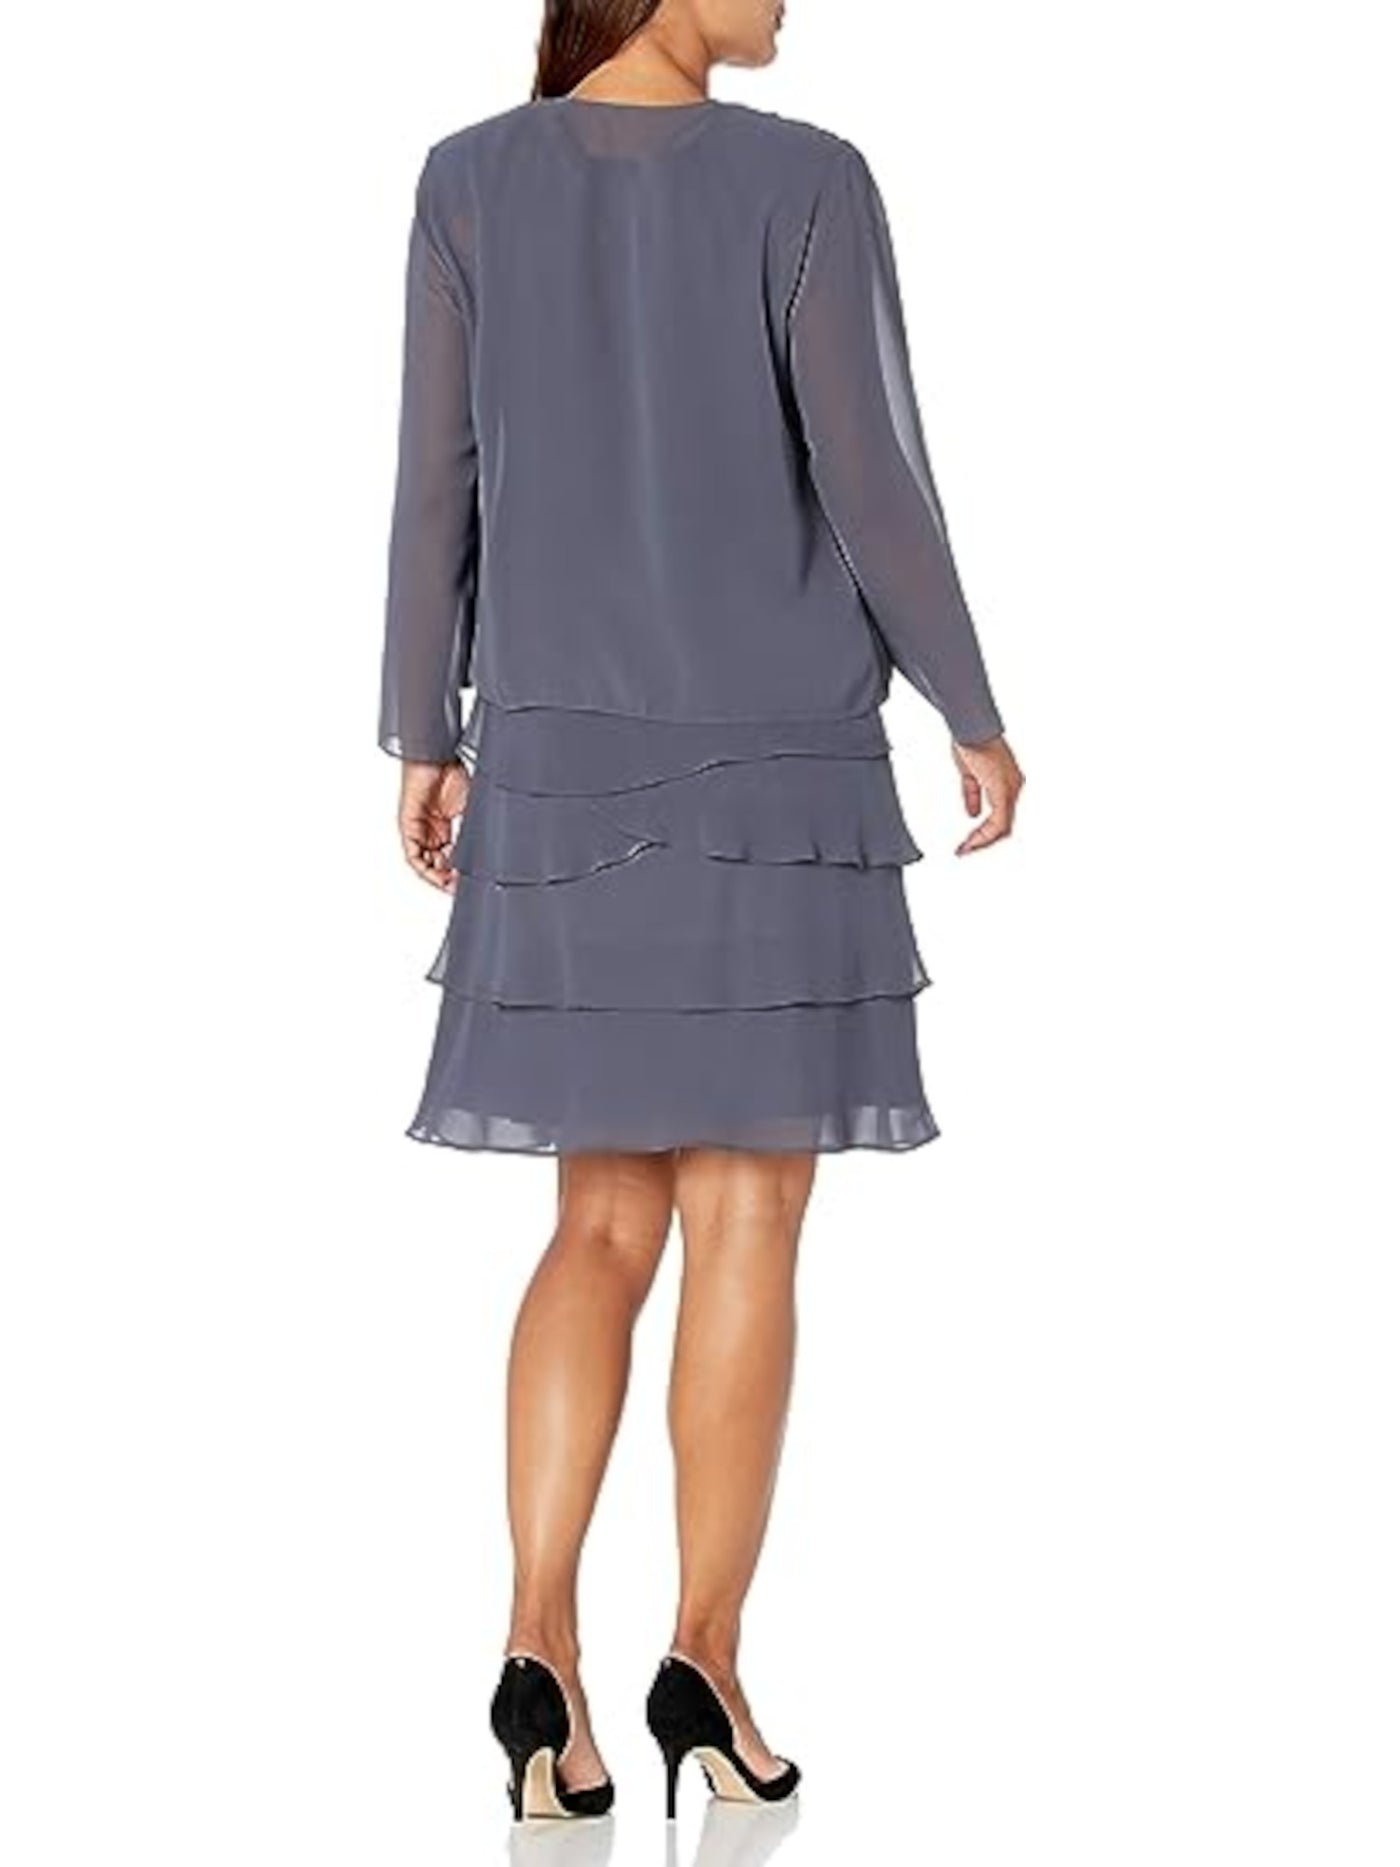 SLNY Womens Gray Sheer Embellished Lace Shoulder Pads Long Sleeve Open Front Formal Cardigan 8